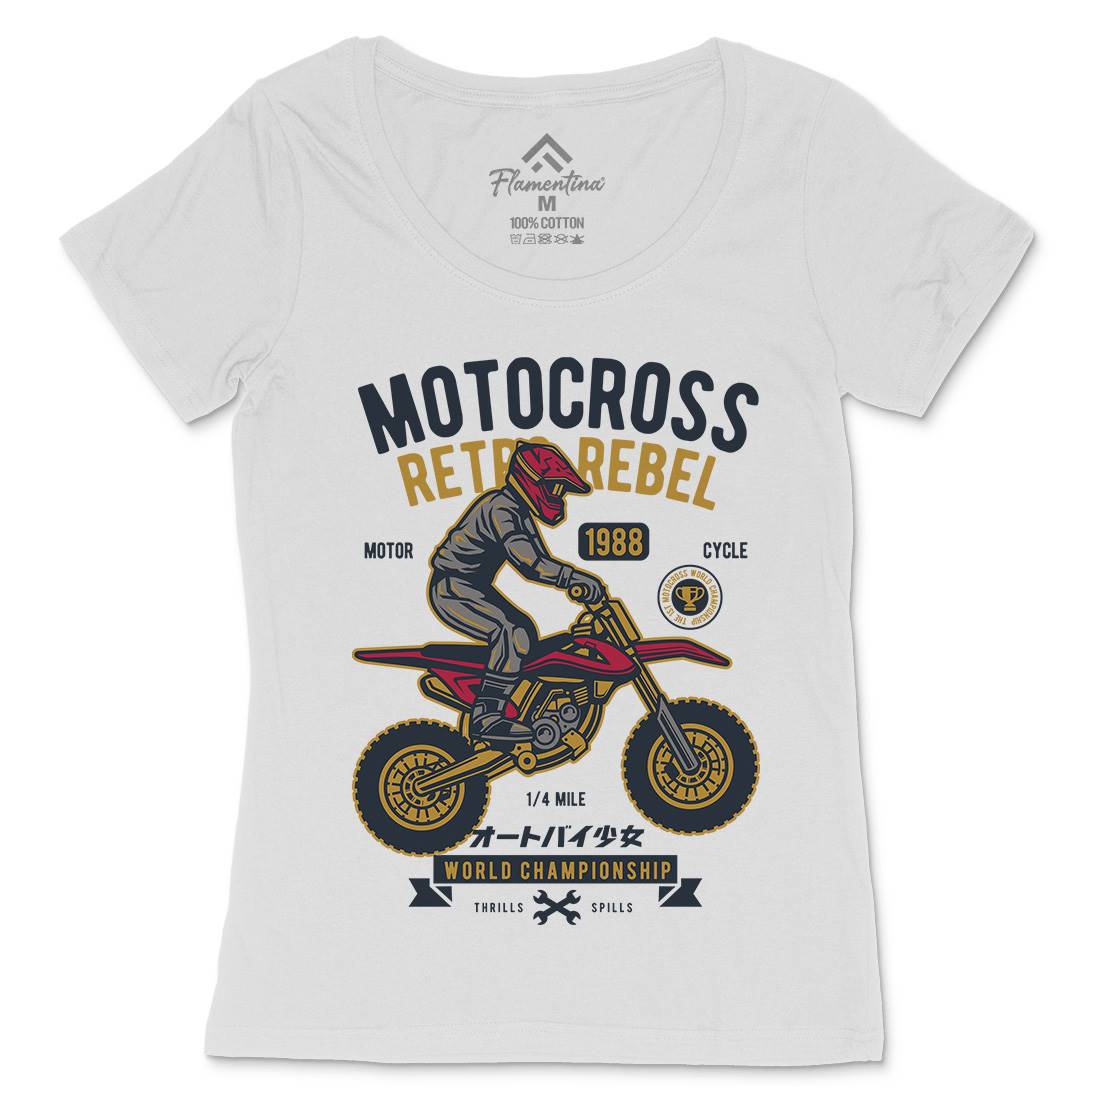 Motocross Retro Rebel Womens Scoop Neck T-Shirt Motorcycles D553